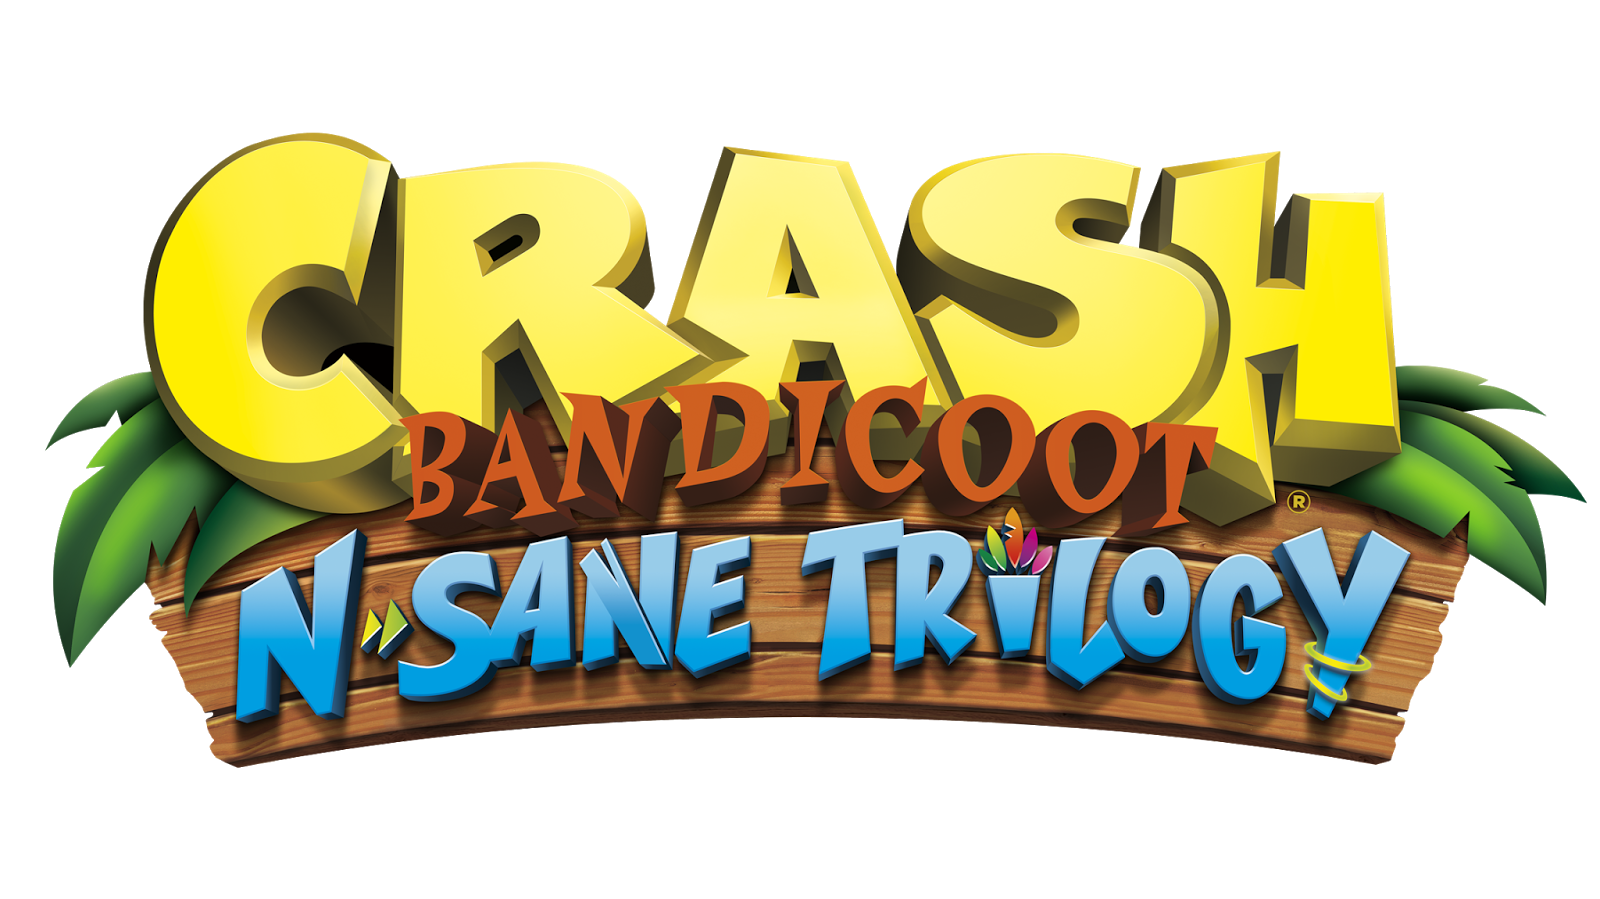 Crash Bandicoot Logo PNG Image